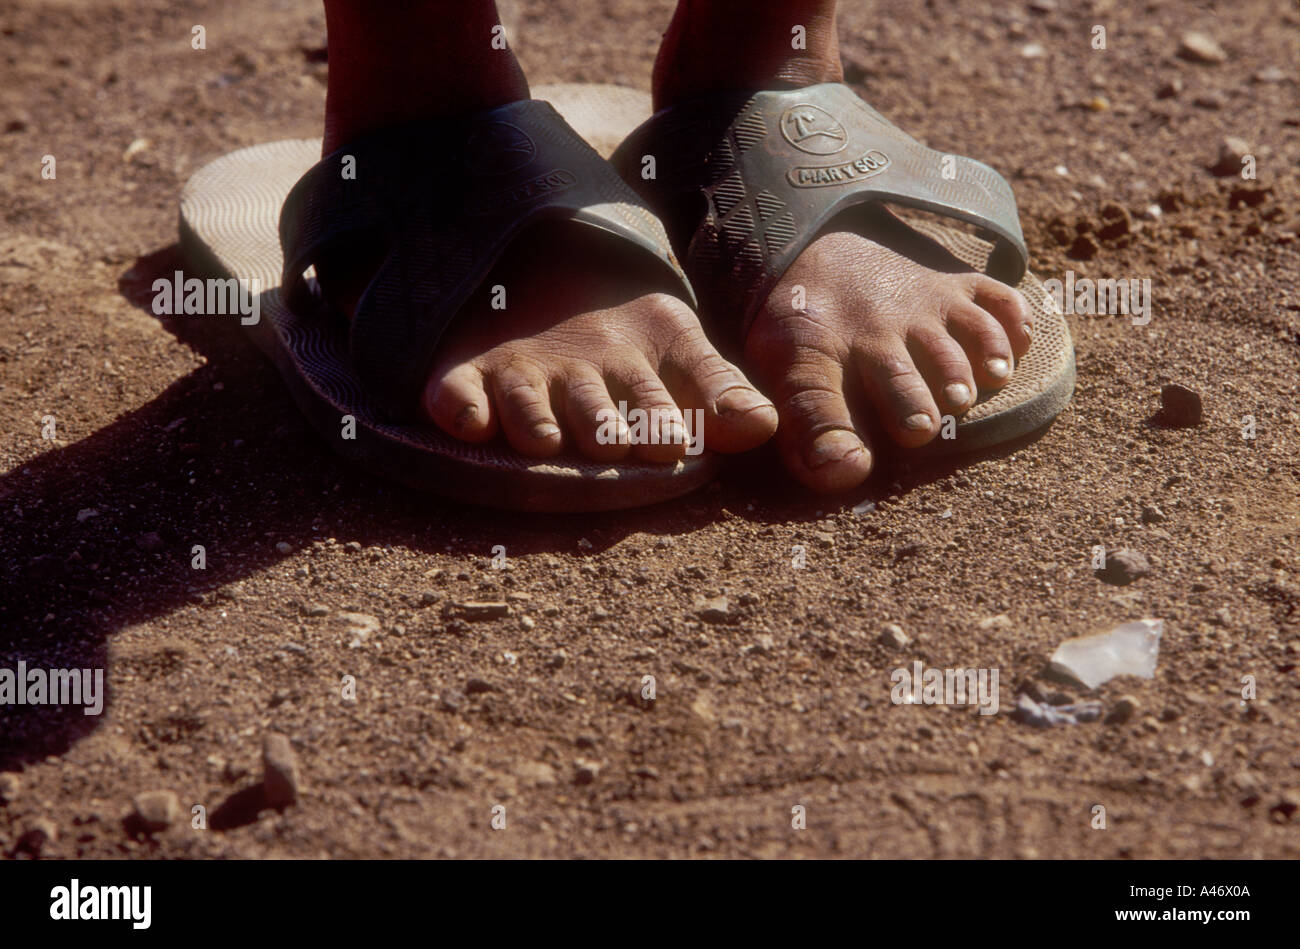 child's feet in sandals that are too big, Villa Nueva slum, Honduras Stock Photo - Alamy